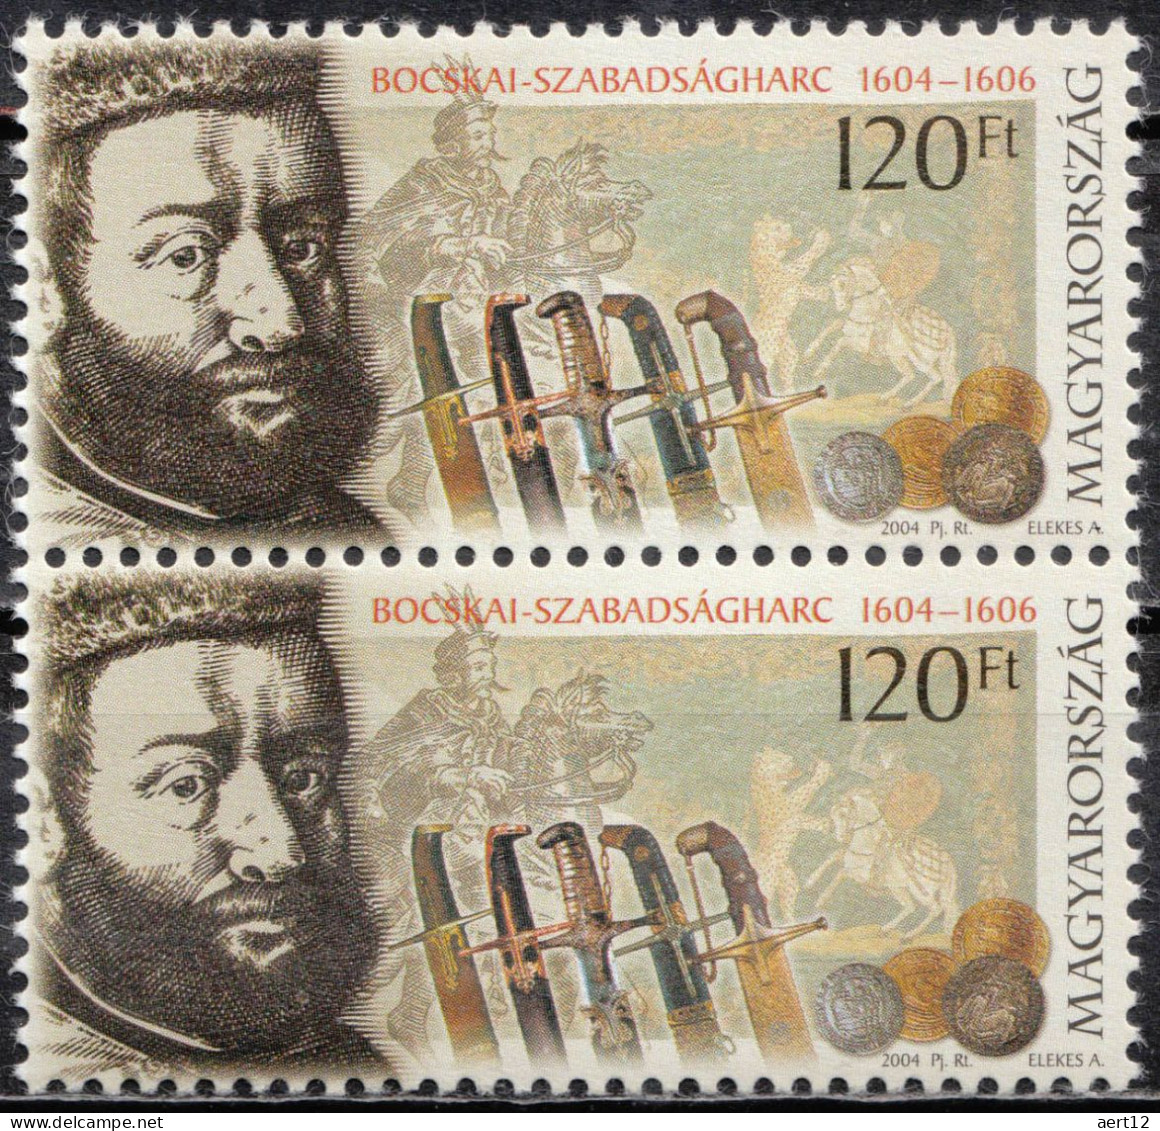 2004, Hungary, Bocskai, Anniversaries And Jubilees, Battle, Coins, Horses, 2 Stamps, MNH(**), HU 4954x2 - Ungebraucht